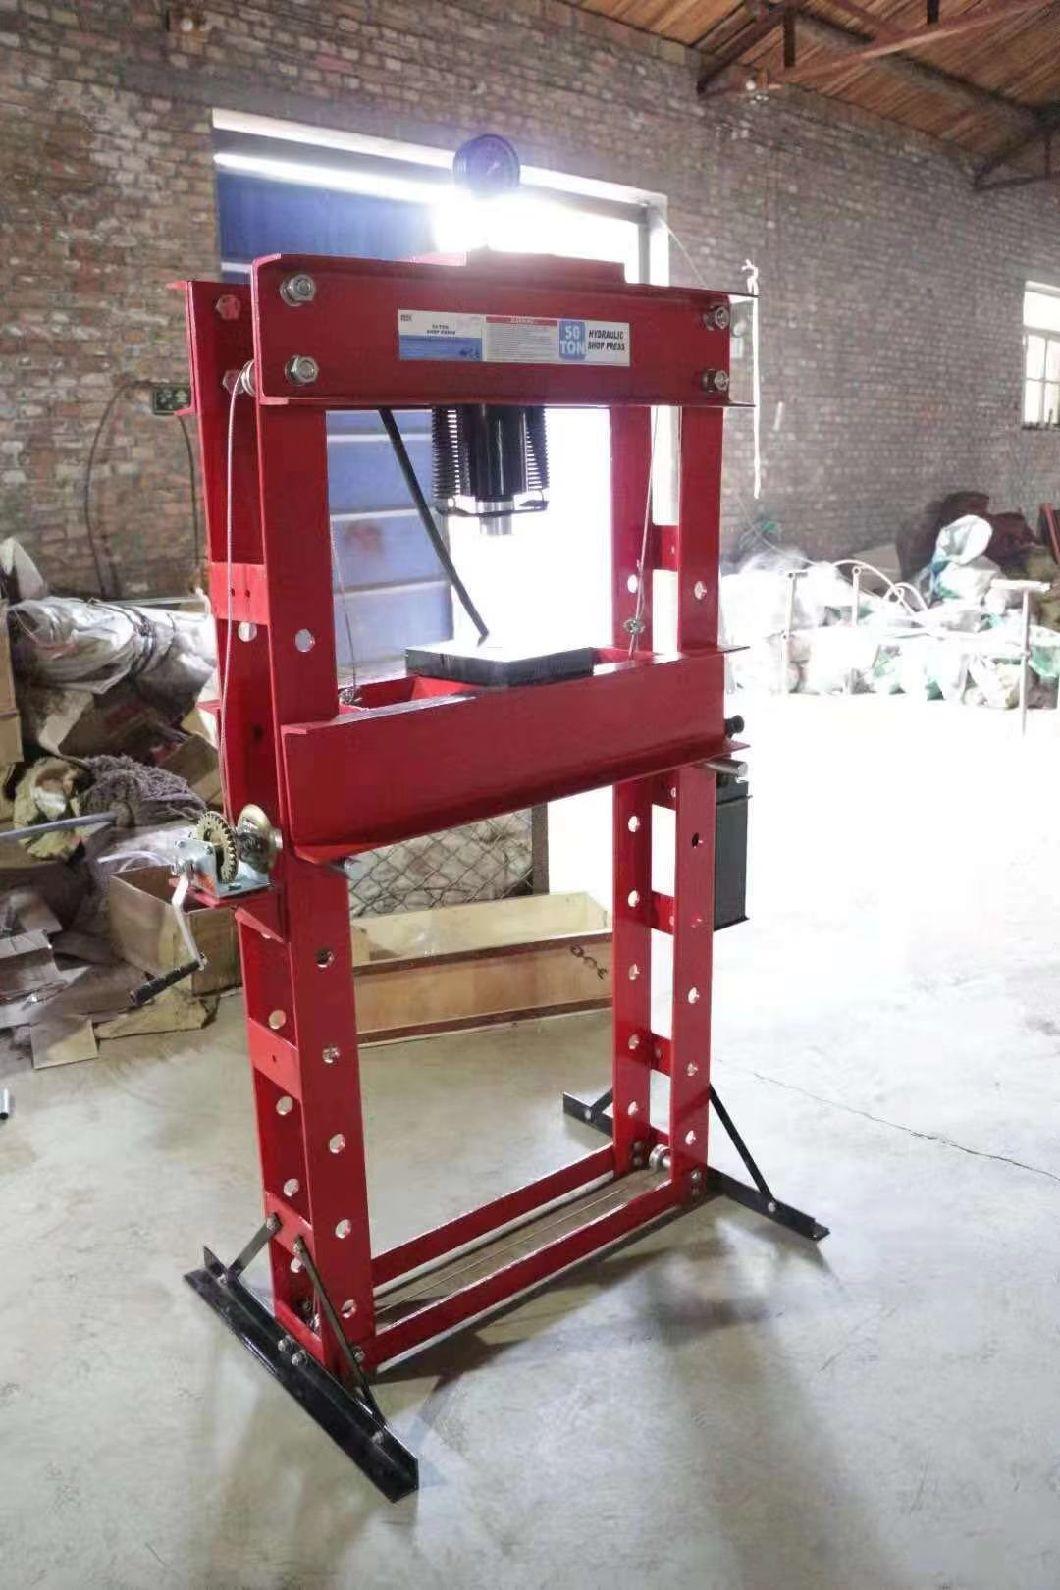 45 Ton Electric Hydraulic Press Machine Workshop Press Machine